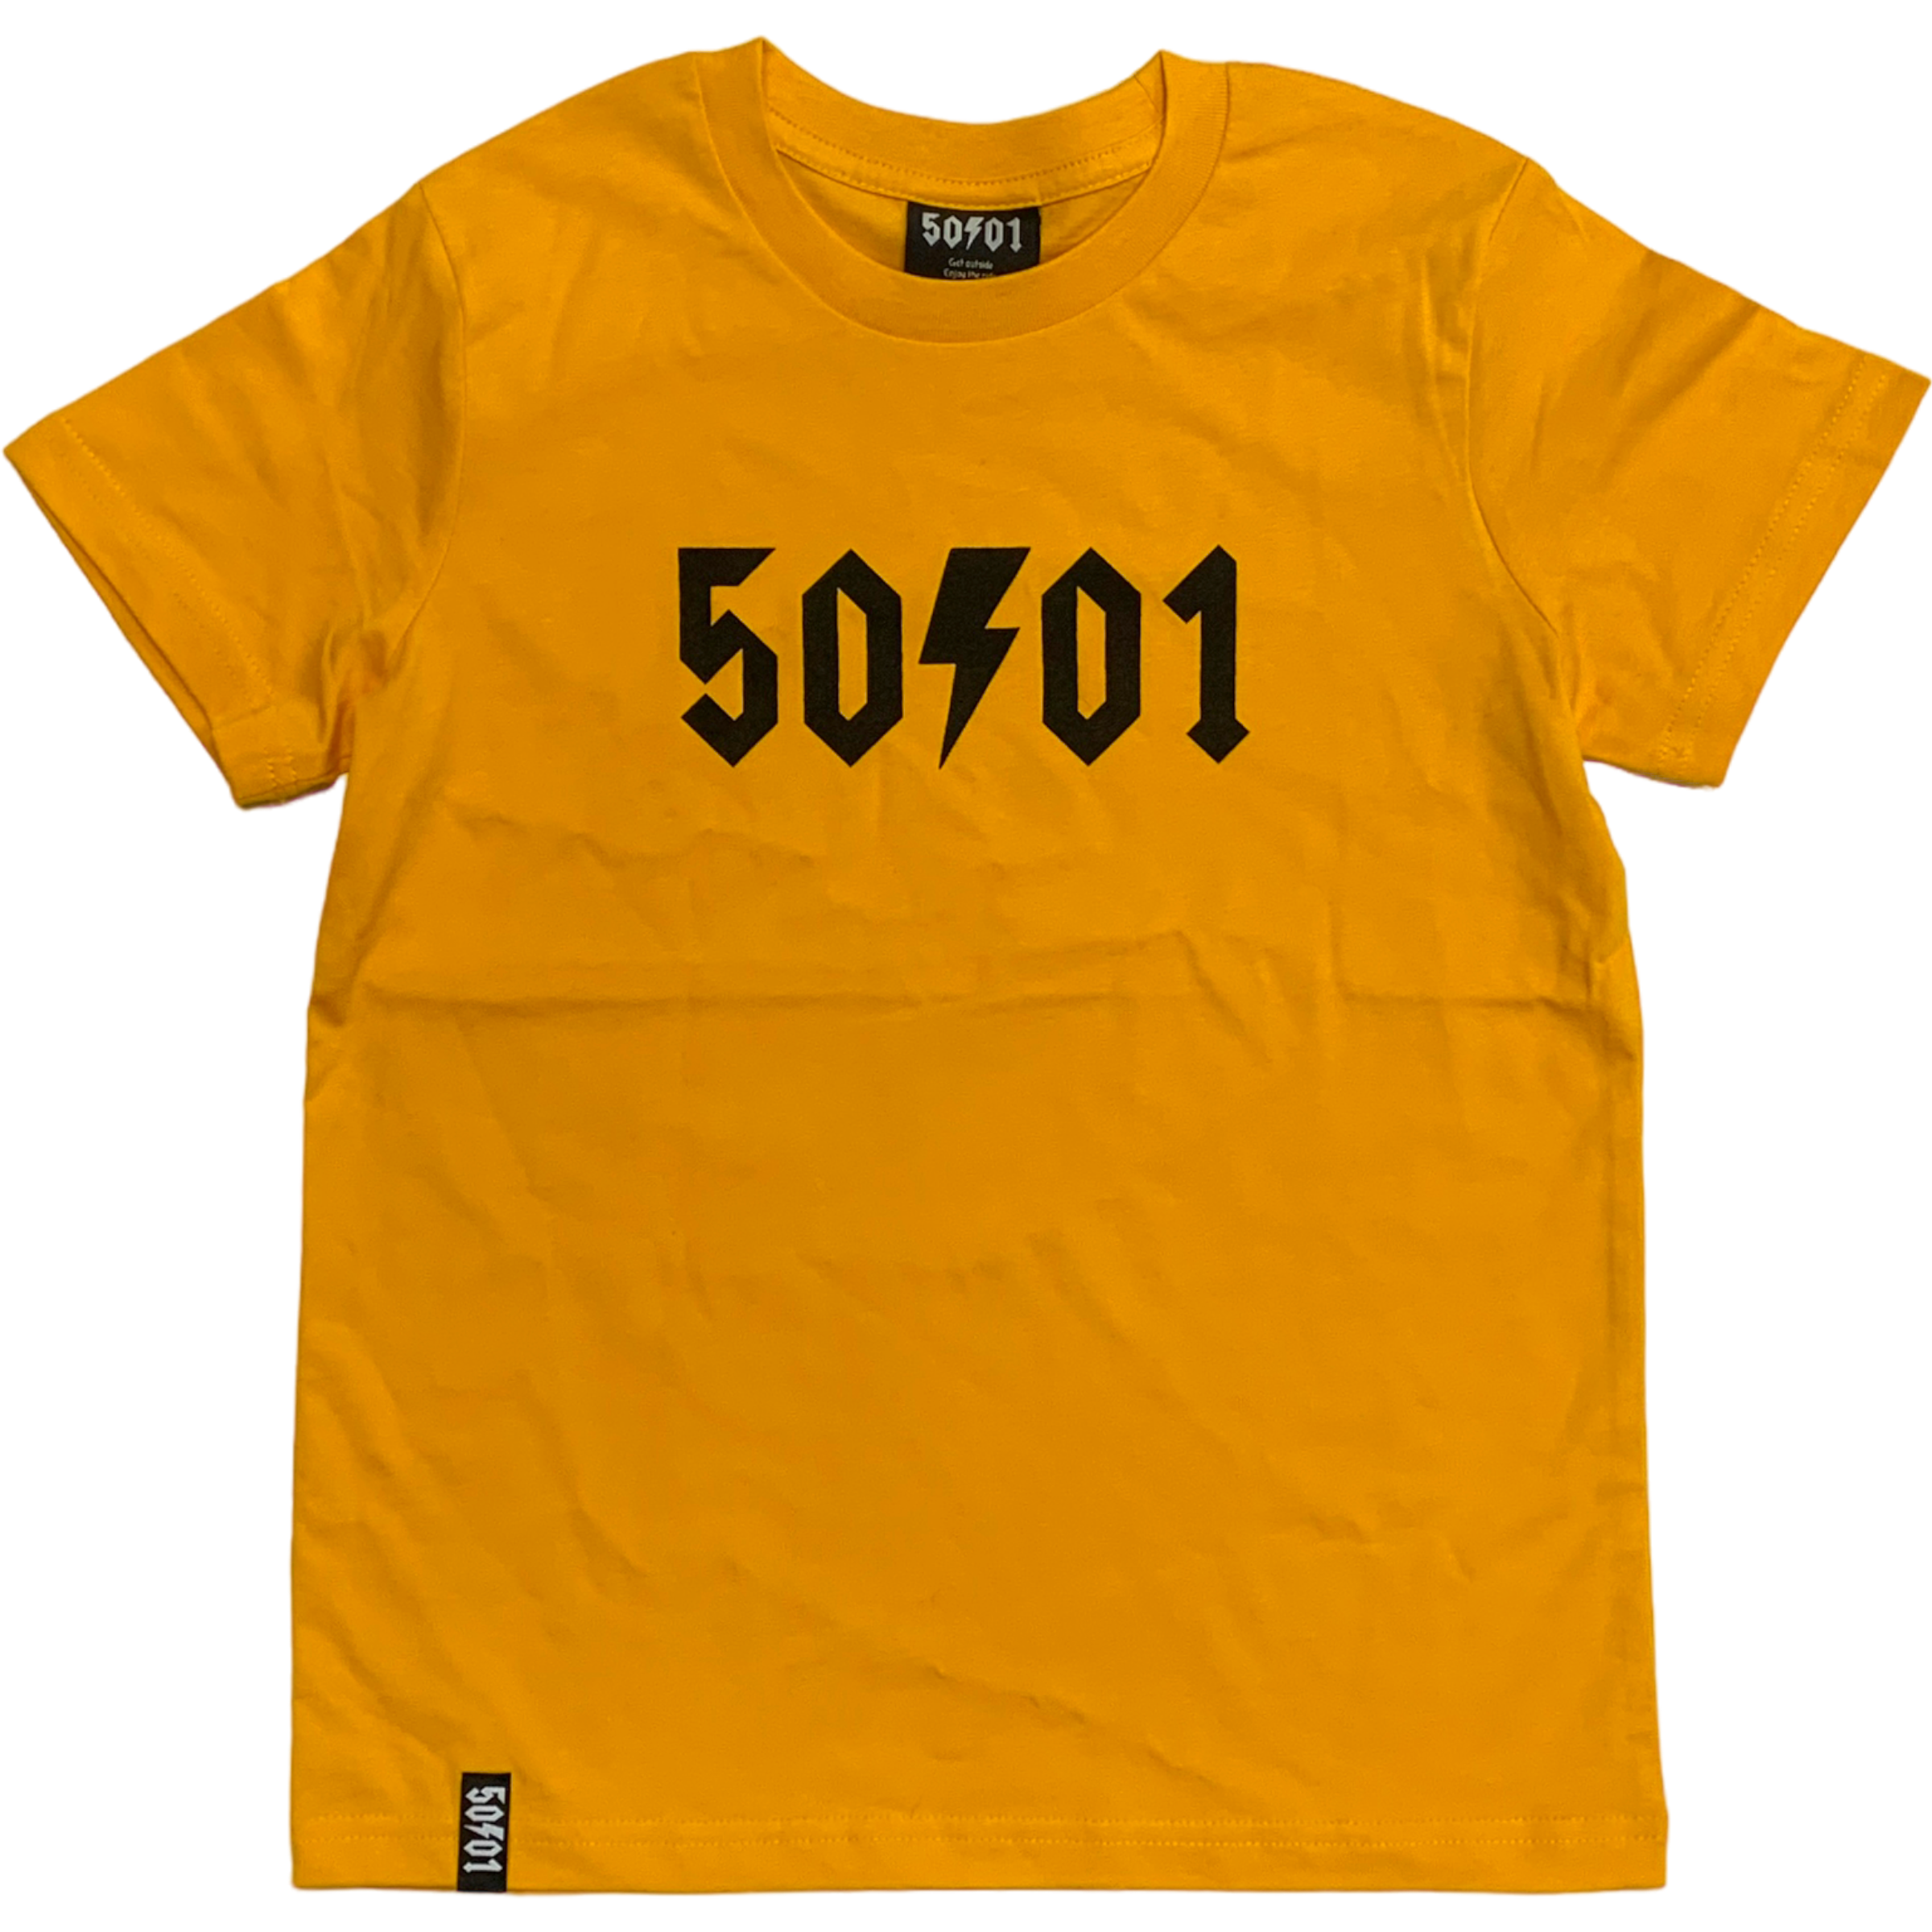 50to01 YOUTH - LOGO T-SHIRT GOLD / BLACK